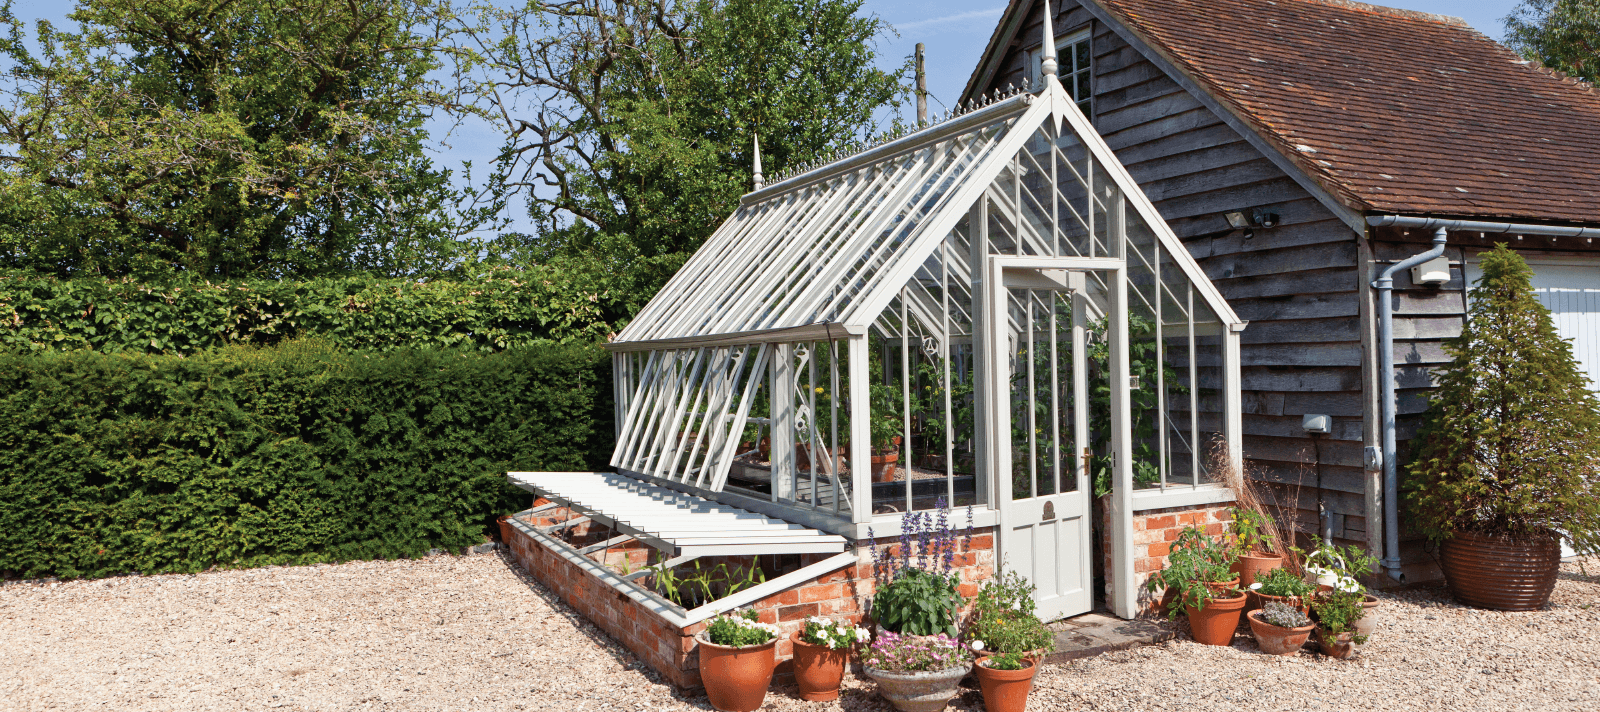 National Trust Scotney greenhouse